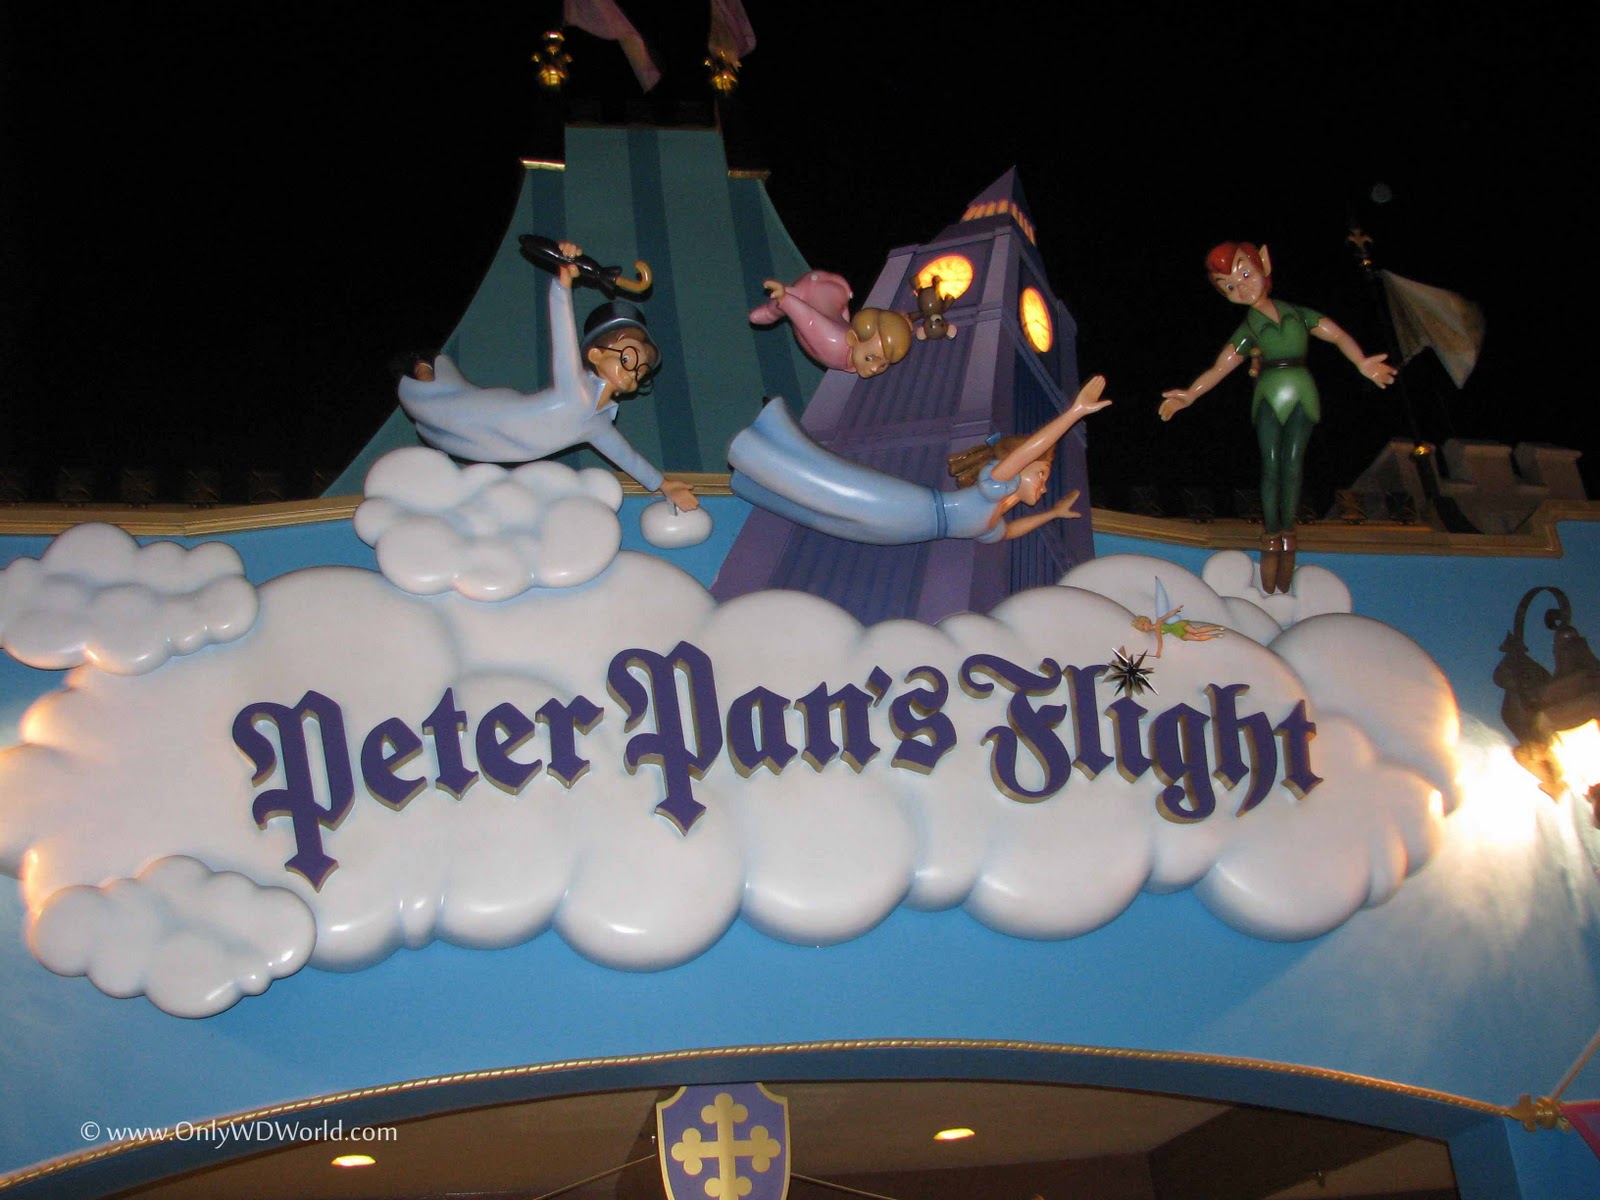 Peter Pan's Flight - A Disney World Classic Attraction